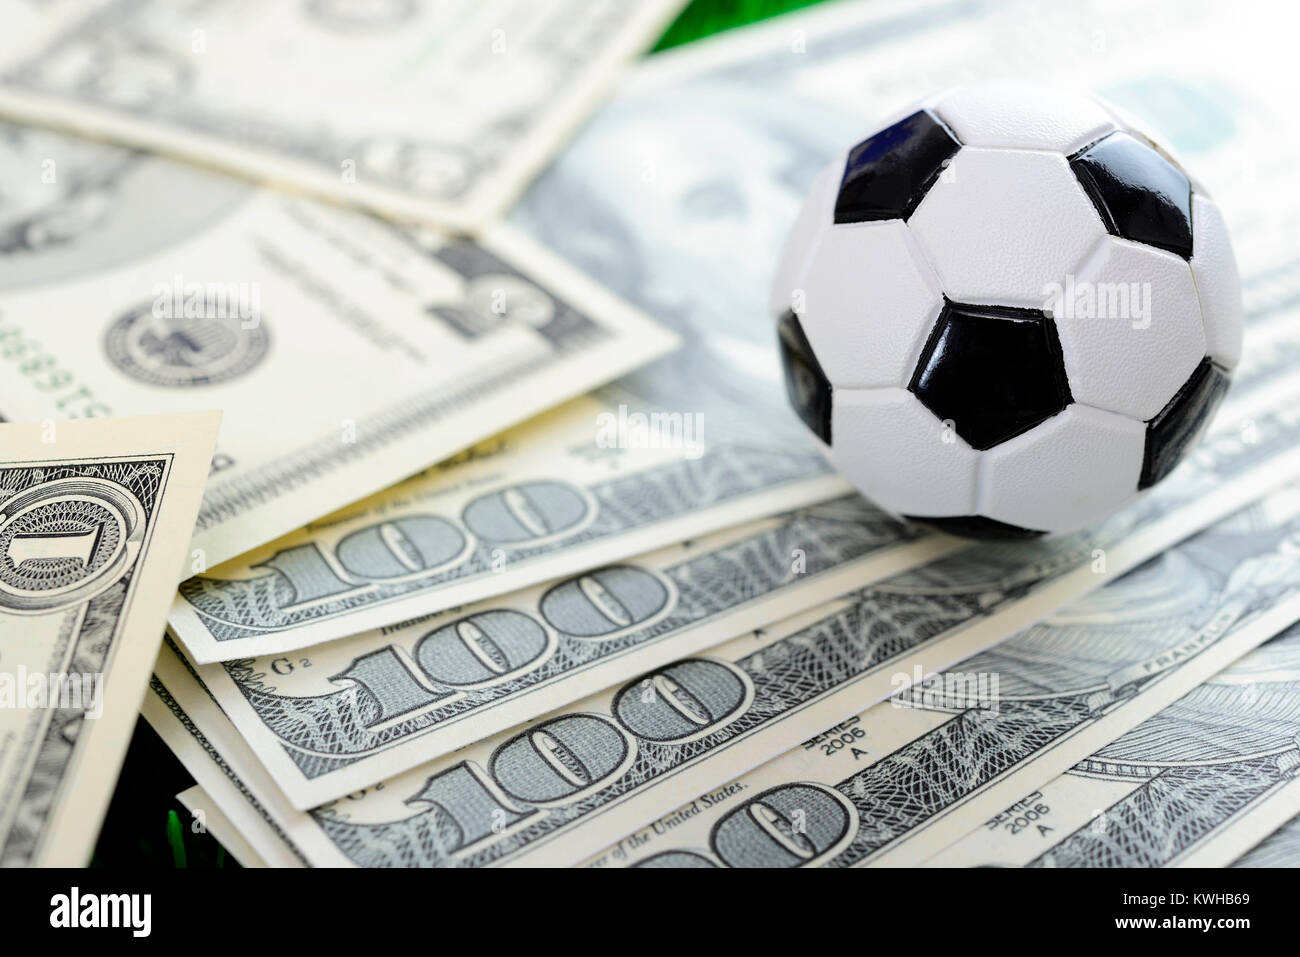 Il calcio in miniatura e dollar note, Fifa scandalo, MiniaturfuÃŸball und Dollarscheine, Fifa-Skandal Foto Stock